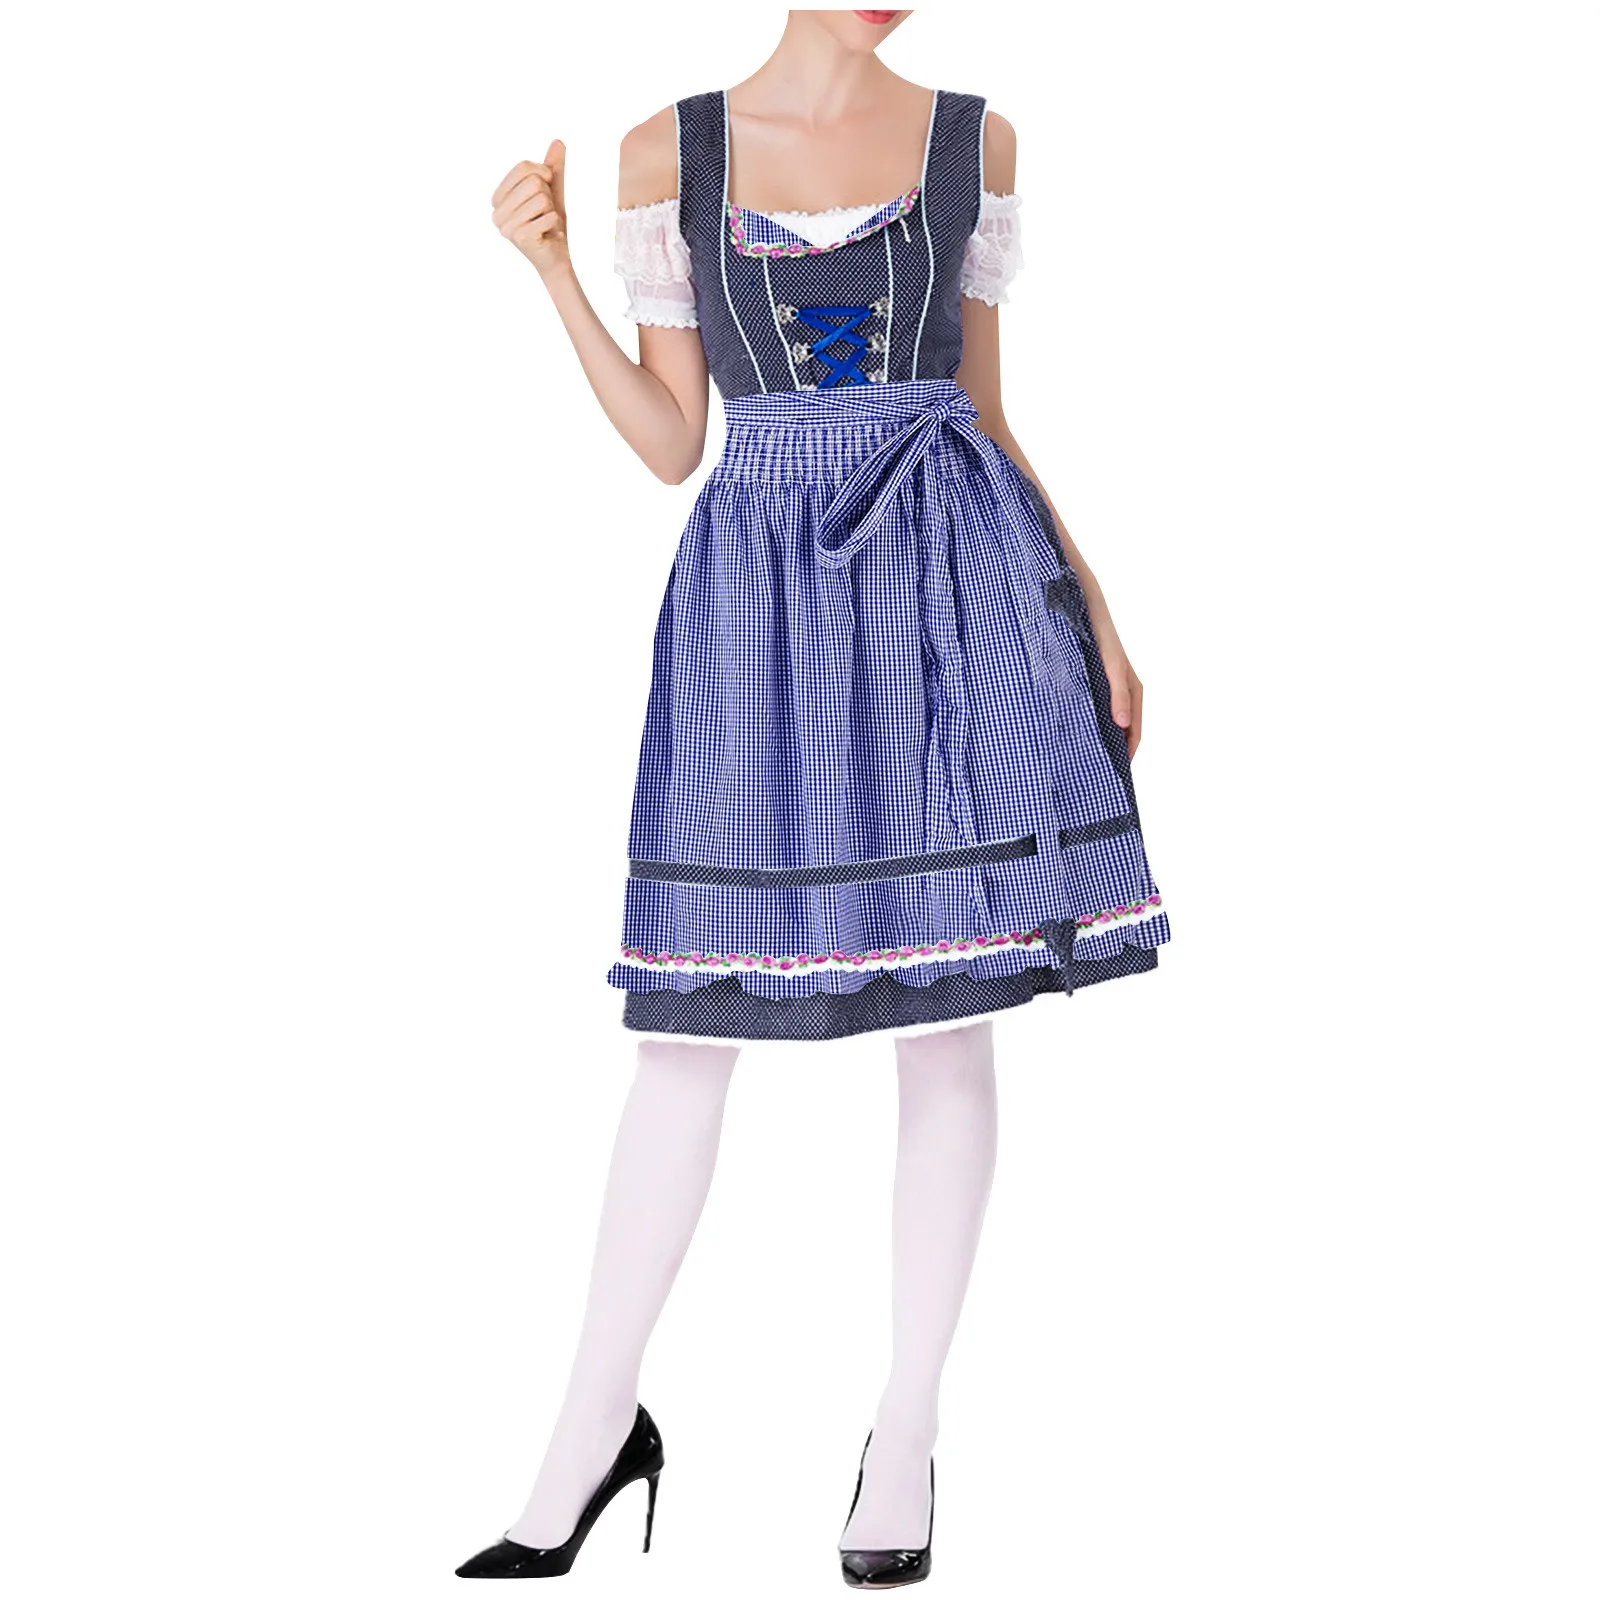 2023 Traditional Bavarian Octoberfest Dresses Set German Beer Wench Costume Adult Lace Oktoberfest Dirndl Dress With Apron